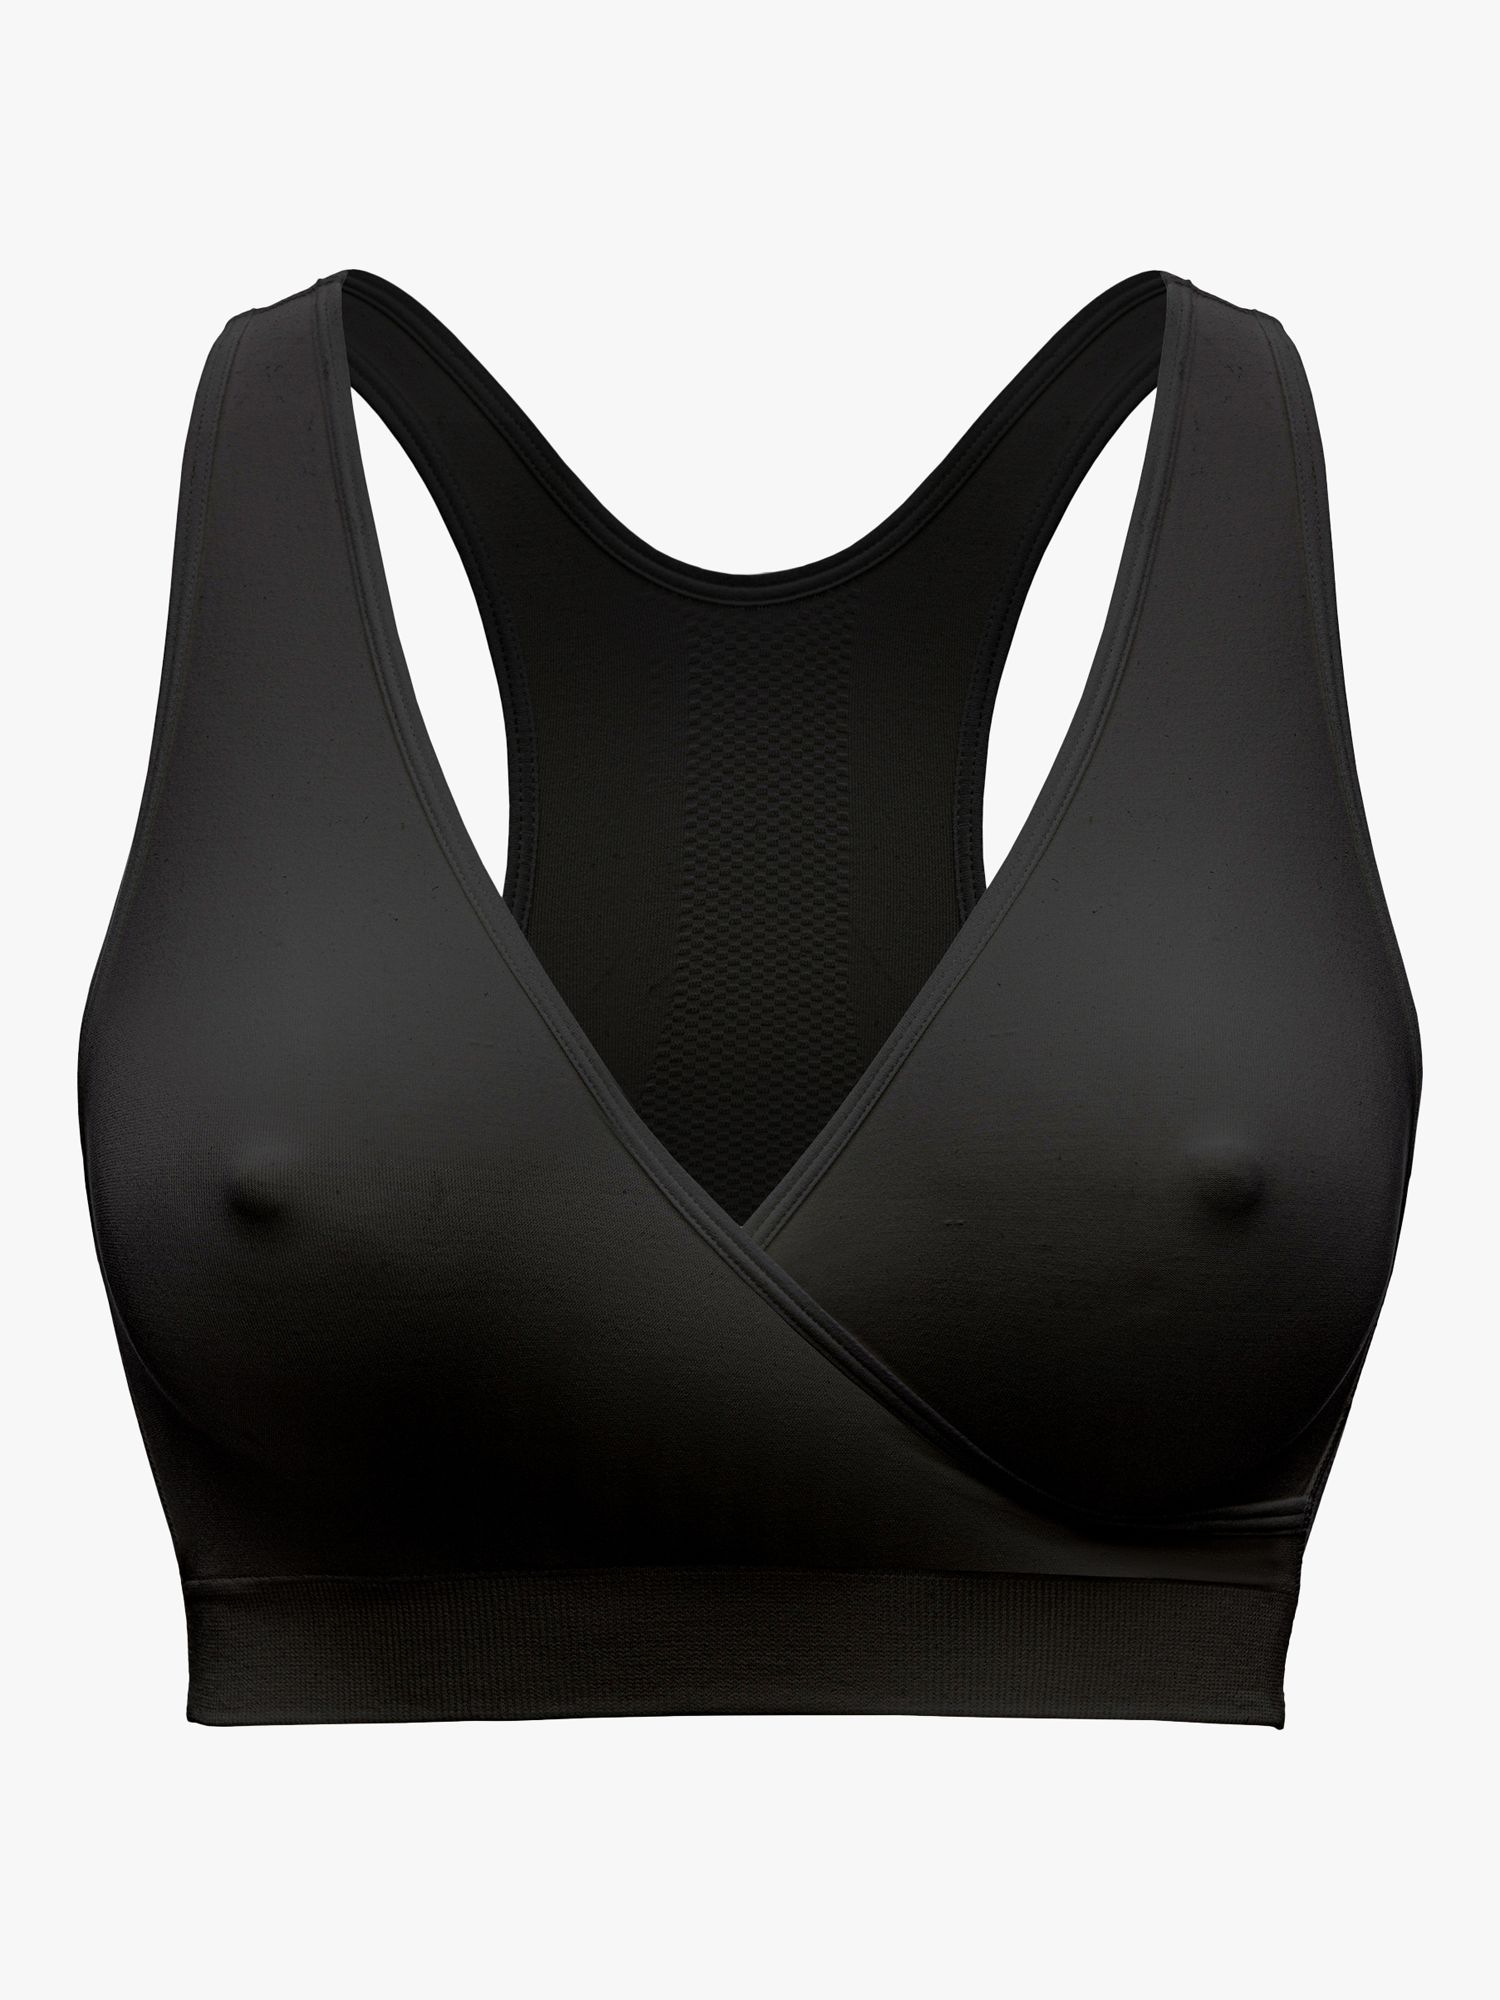 Medela Ultimate BodyFit Bra - Black (Medium)